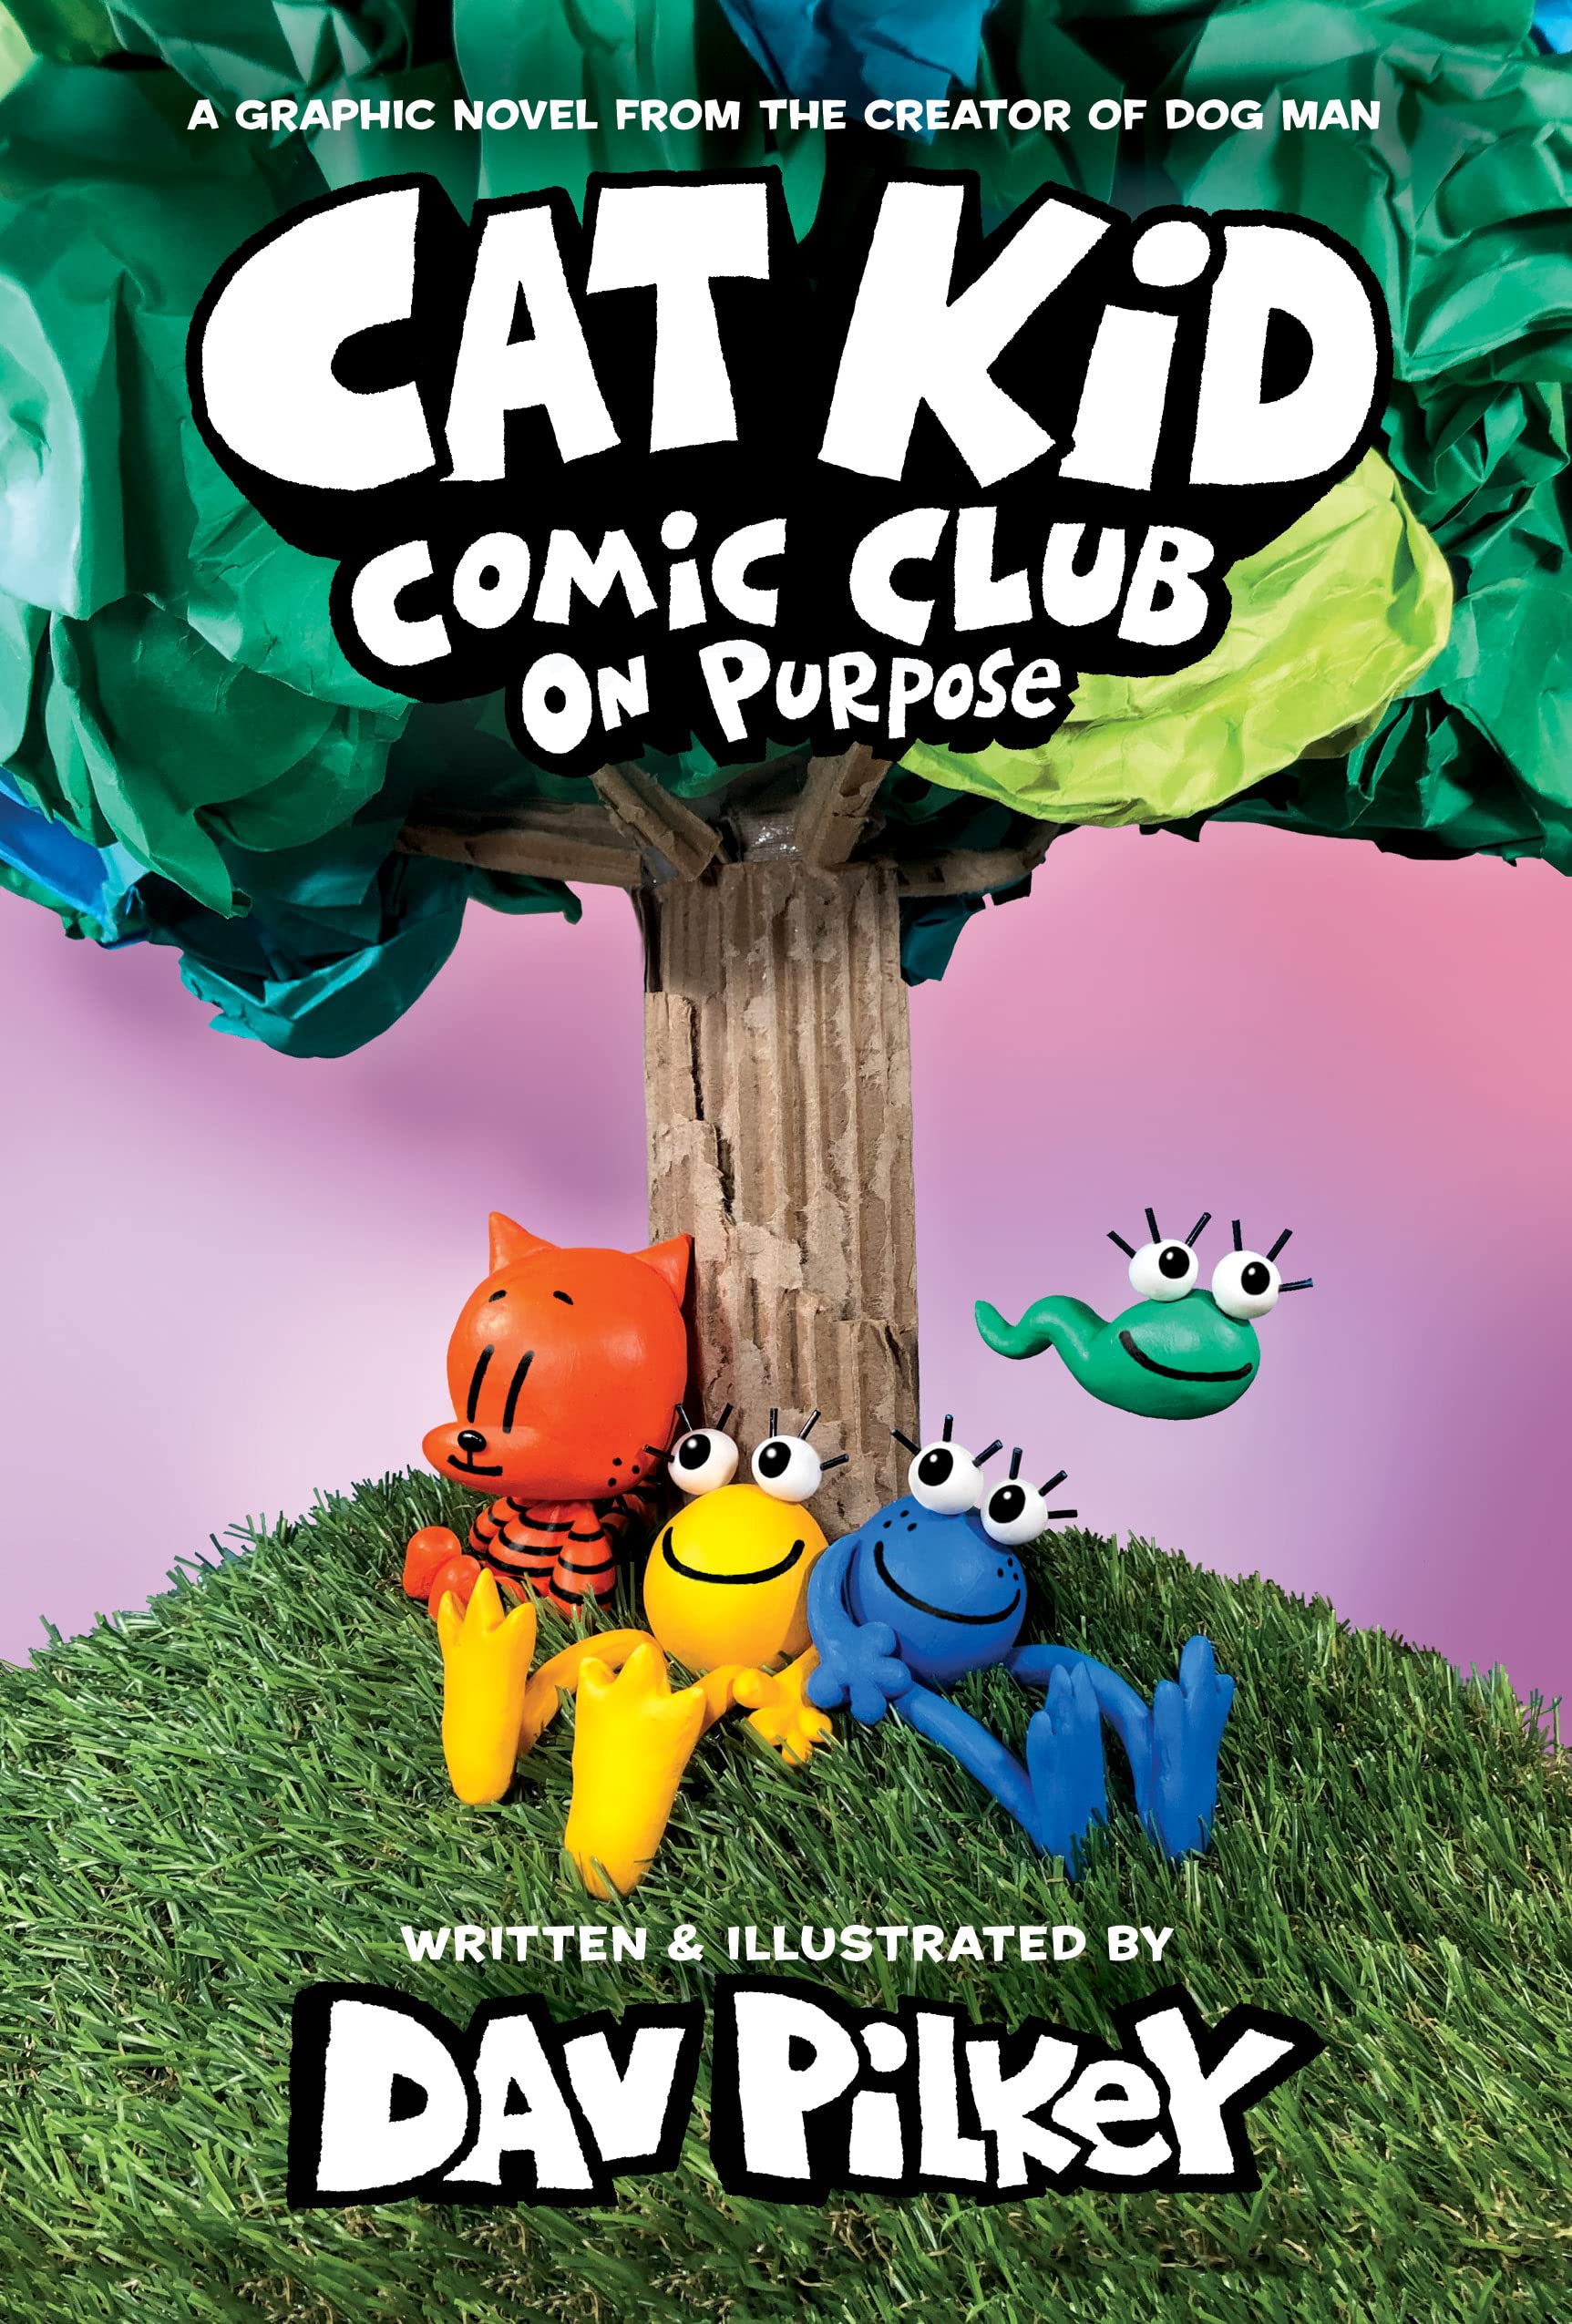 Cat kid comic club : on purpose